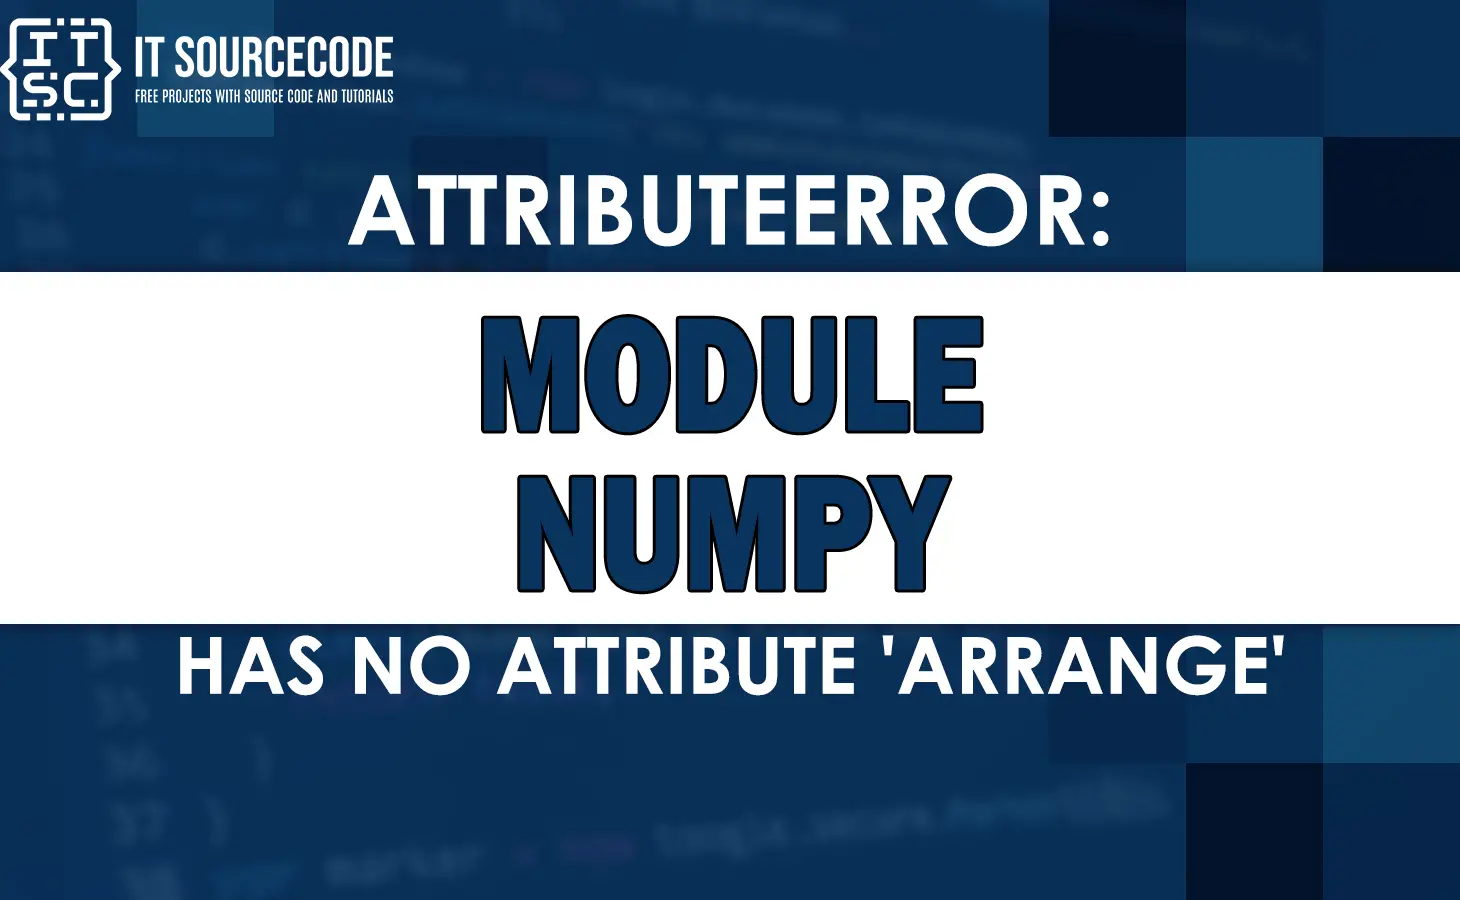 Attributeerror: Module Numpy Has No Attribute Arrange [Solved]